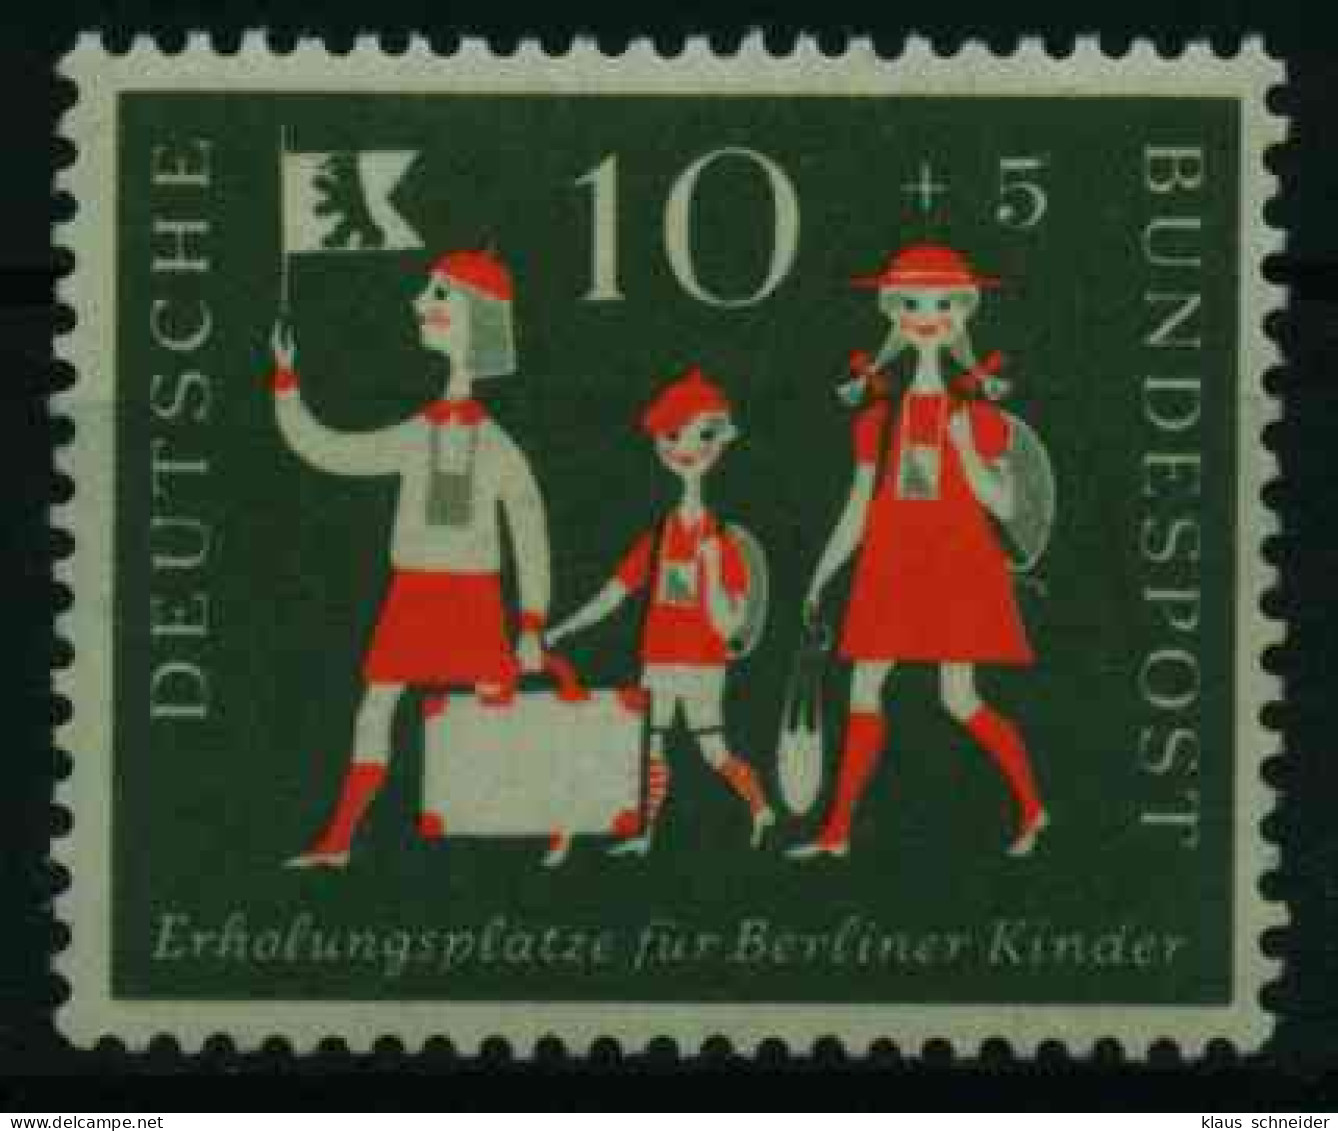 BRD 1957 Nr 250 Postfrisch SF6EB2E - Unused Stamps